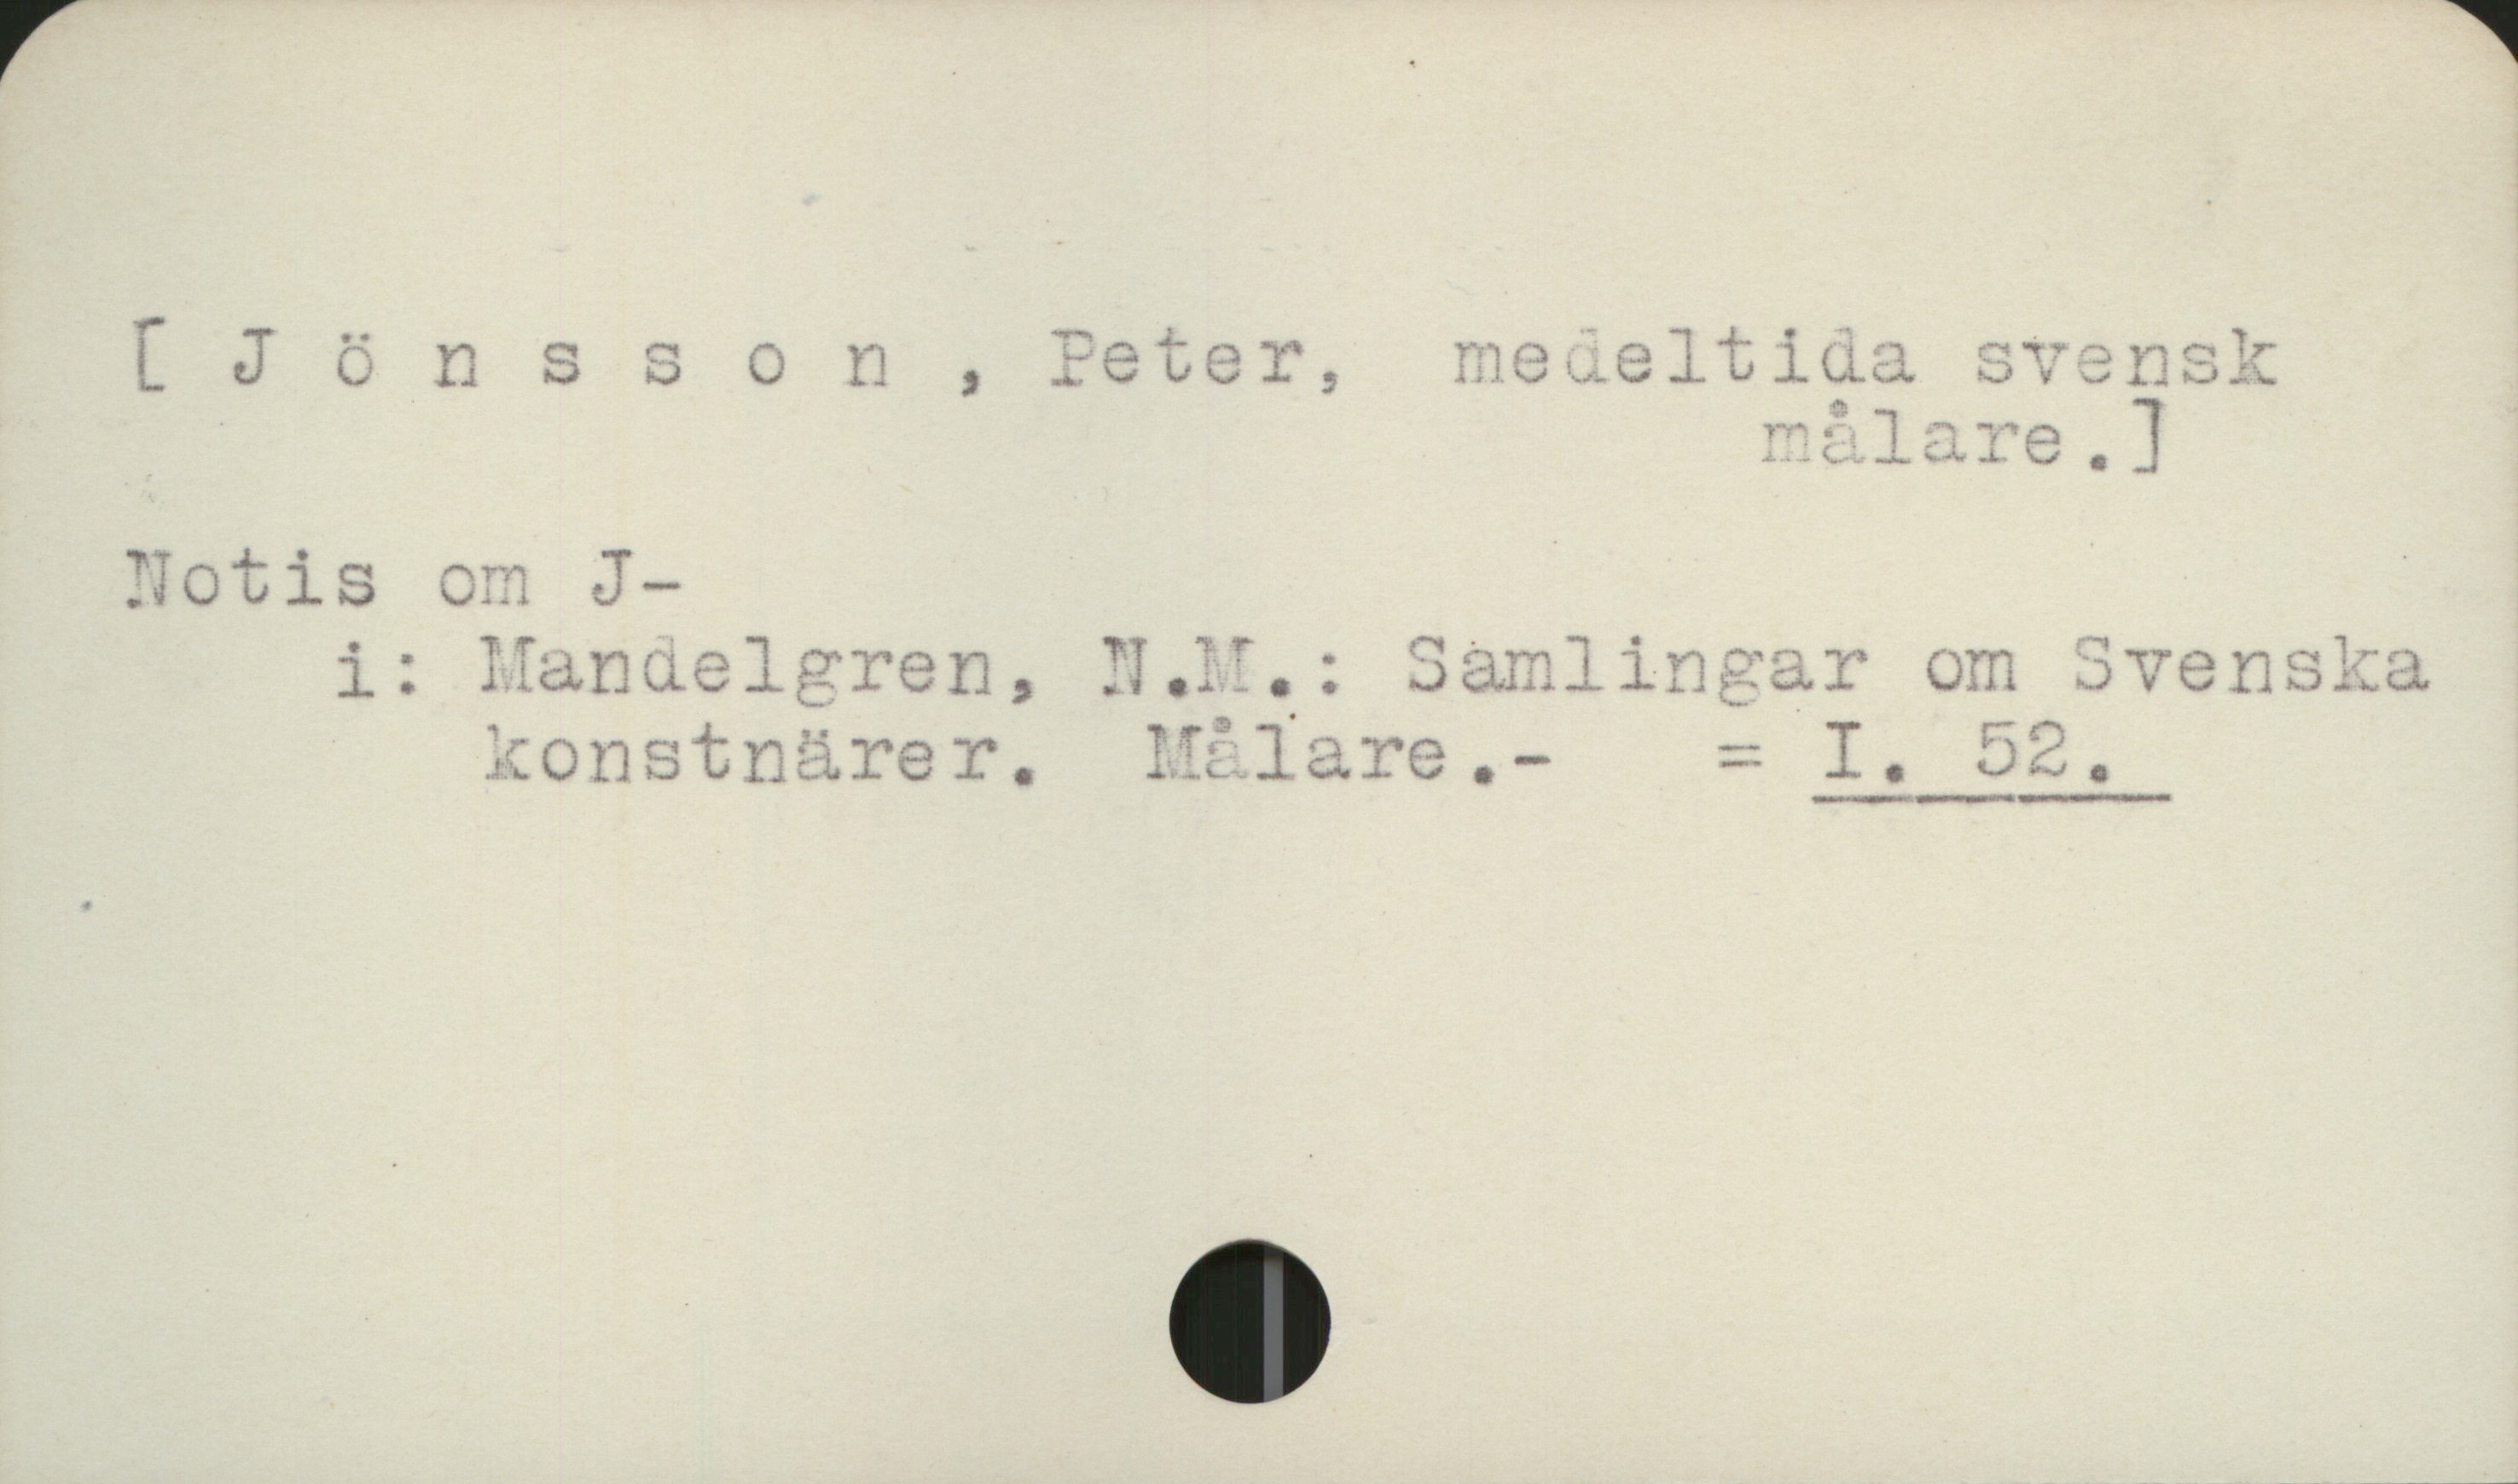 Jönsson , Peter [ Jönsson , Peter, medeltida svensk
                                               målare ]

Notis om J.
        i:  Mandelgren, N.M.: Samlingar om Svenska
            konstnärer.   Målare         =  I 52